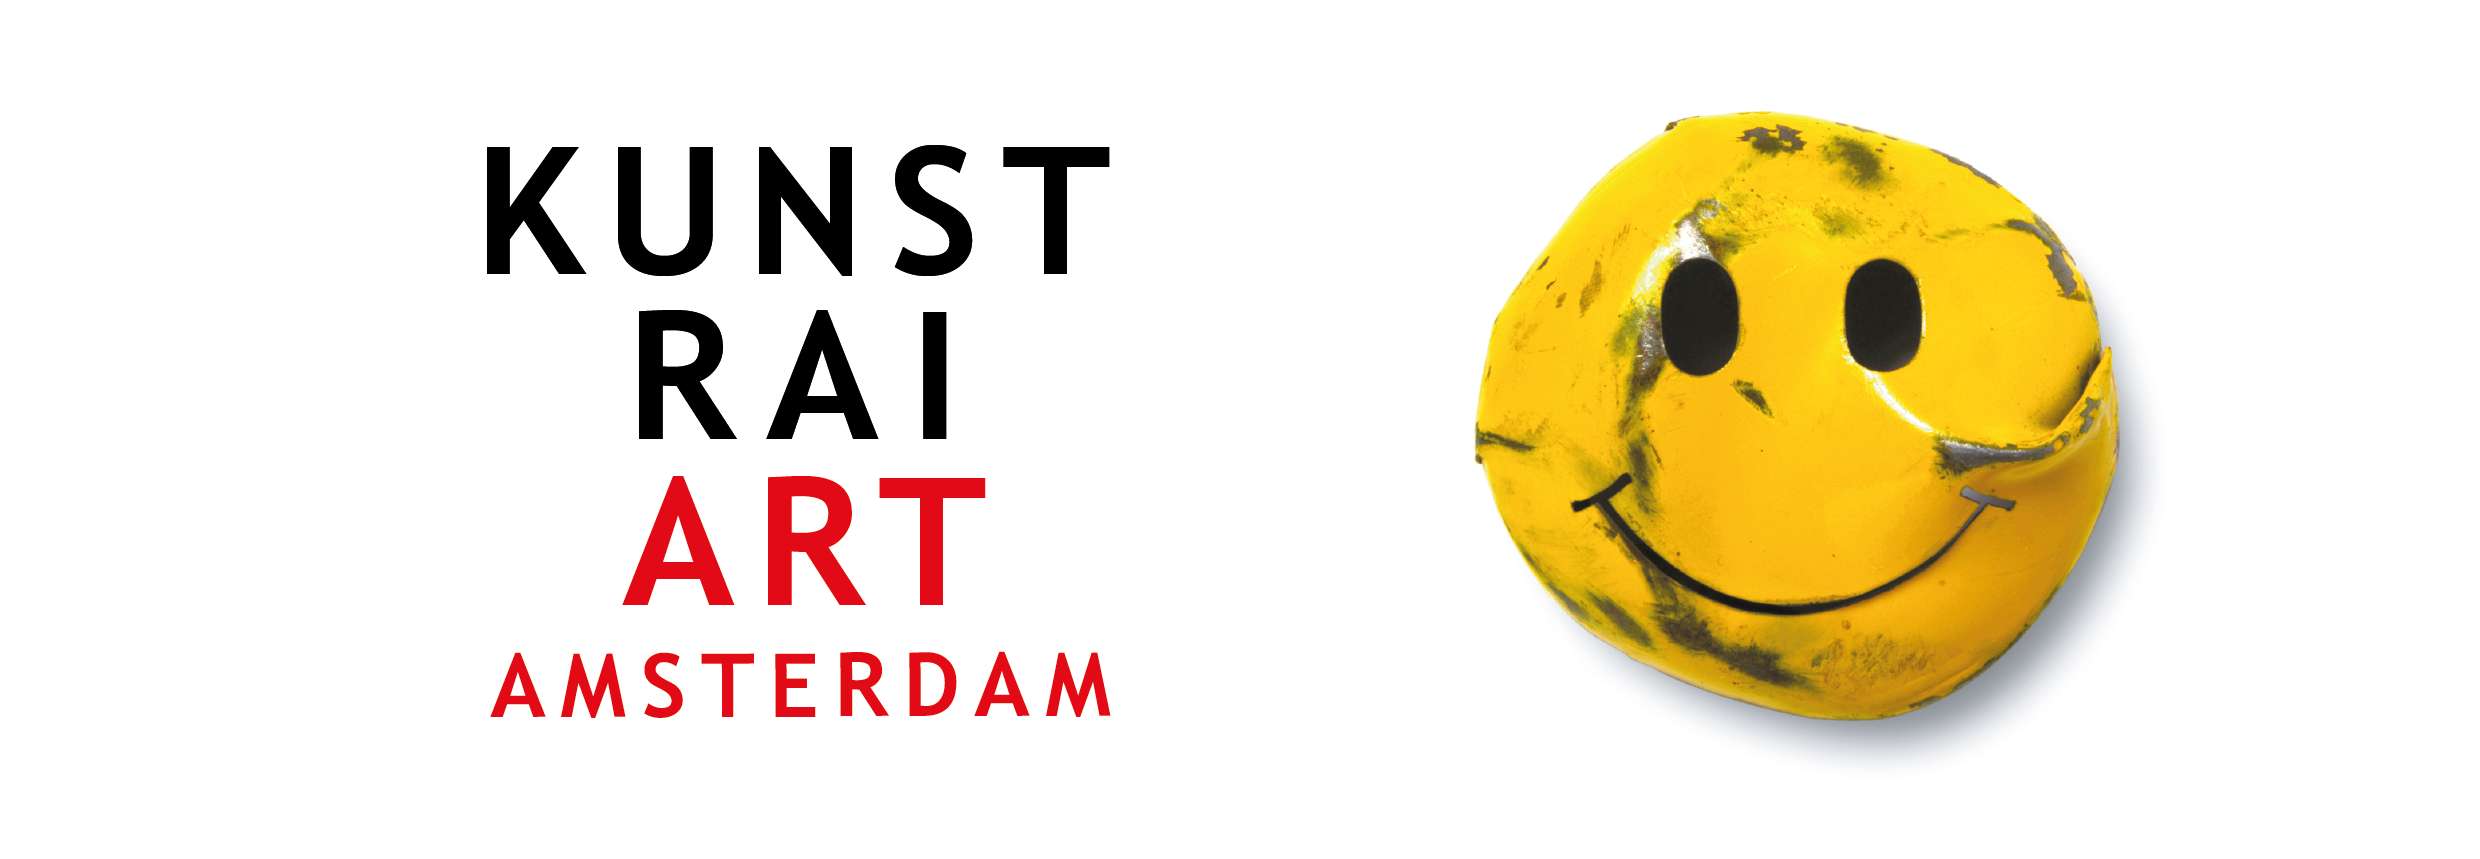 KunstRAI Amsterdam Amsterdam